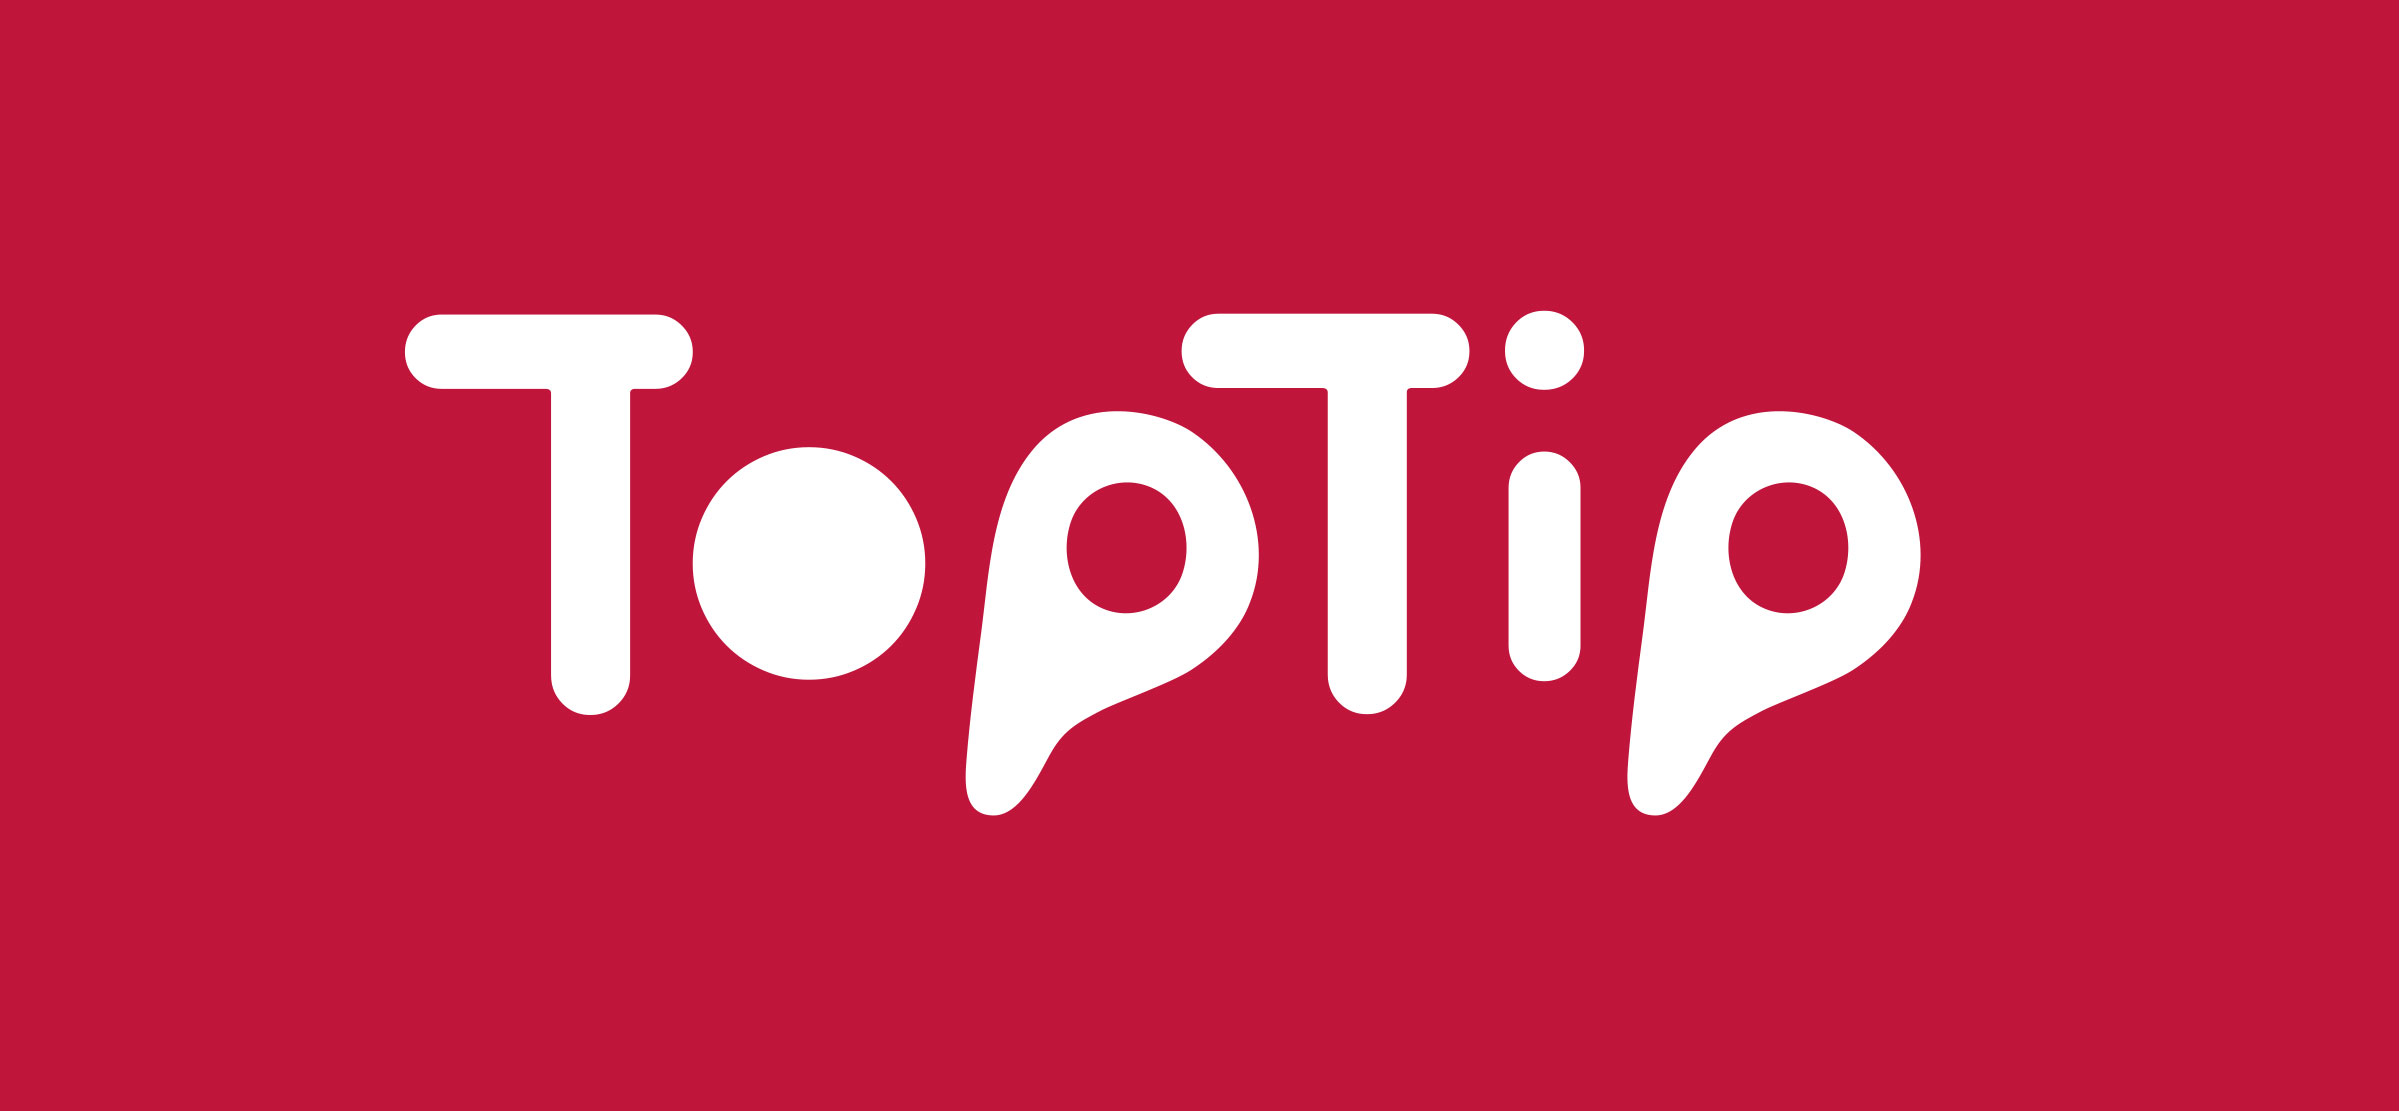 Web app toptip logo